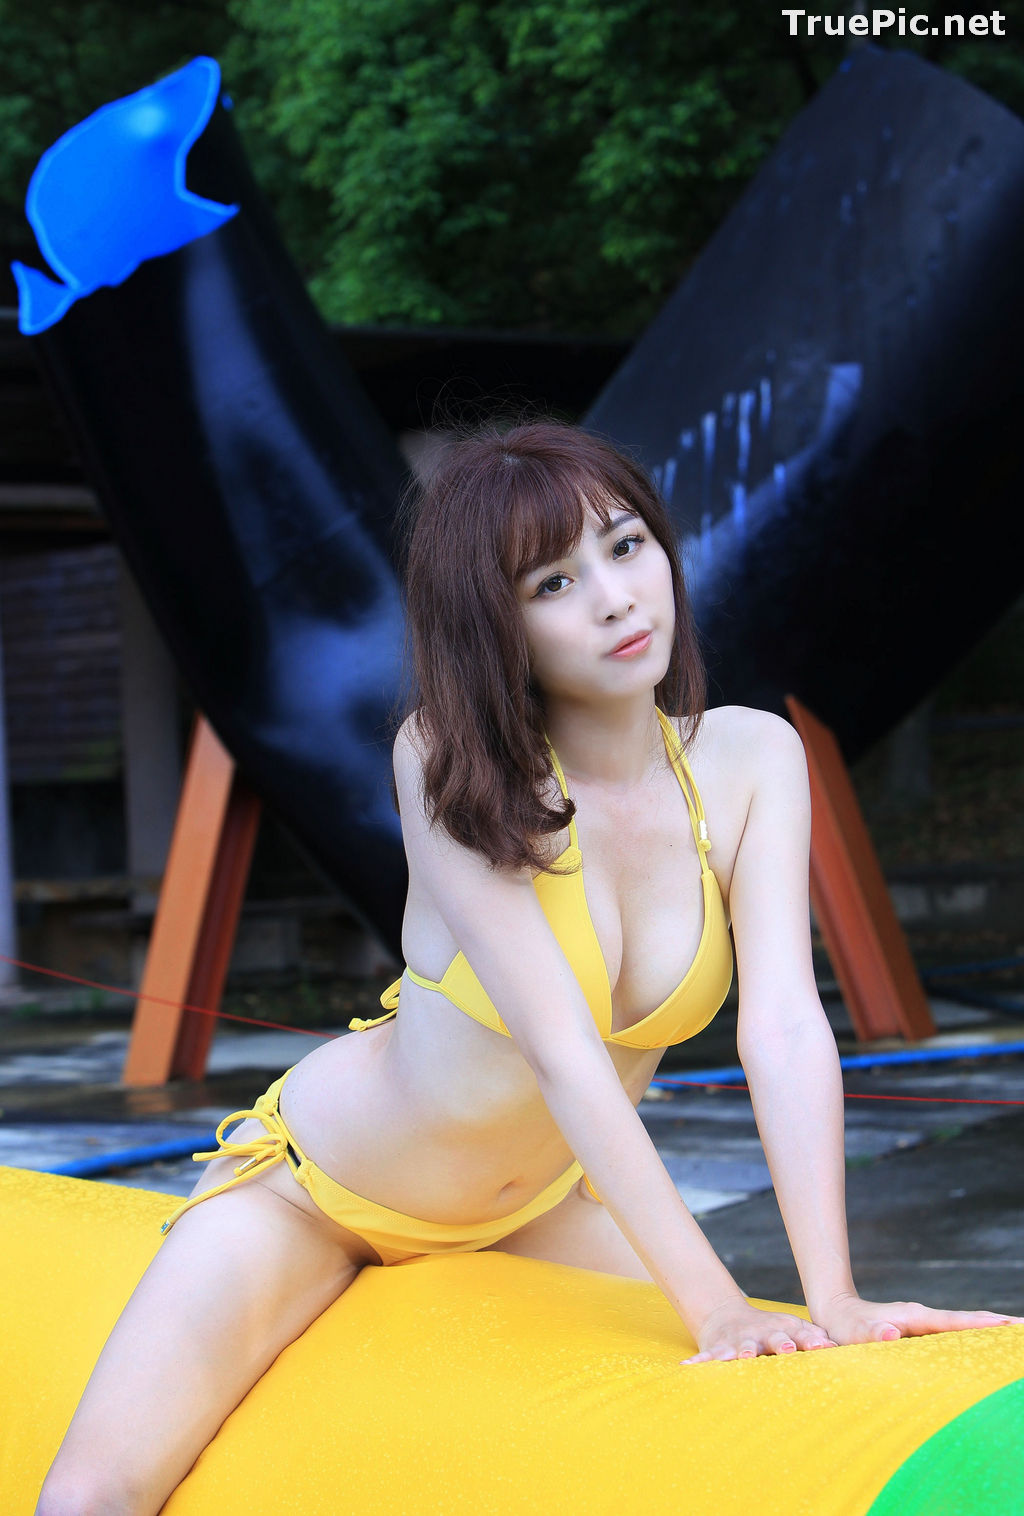 Image Taiwanese Model - Ash Ley - Yellow Bikini at Taipei Water Museum - TruePic.net - Picture-59